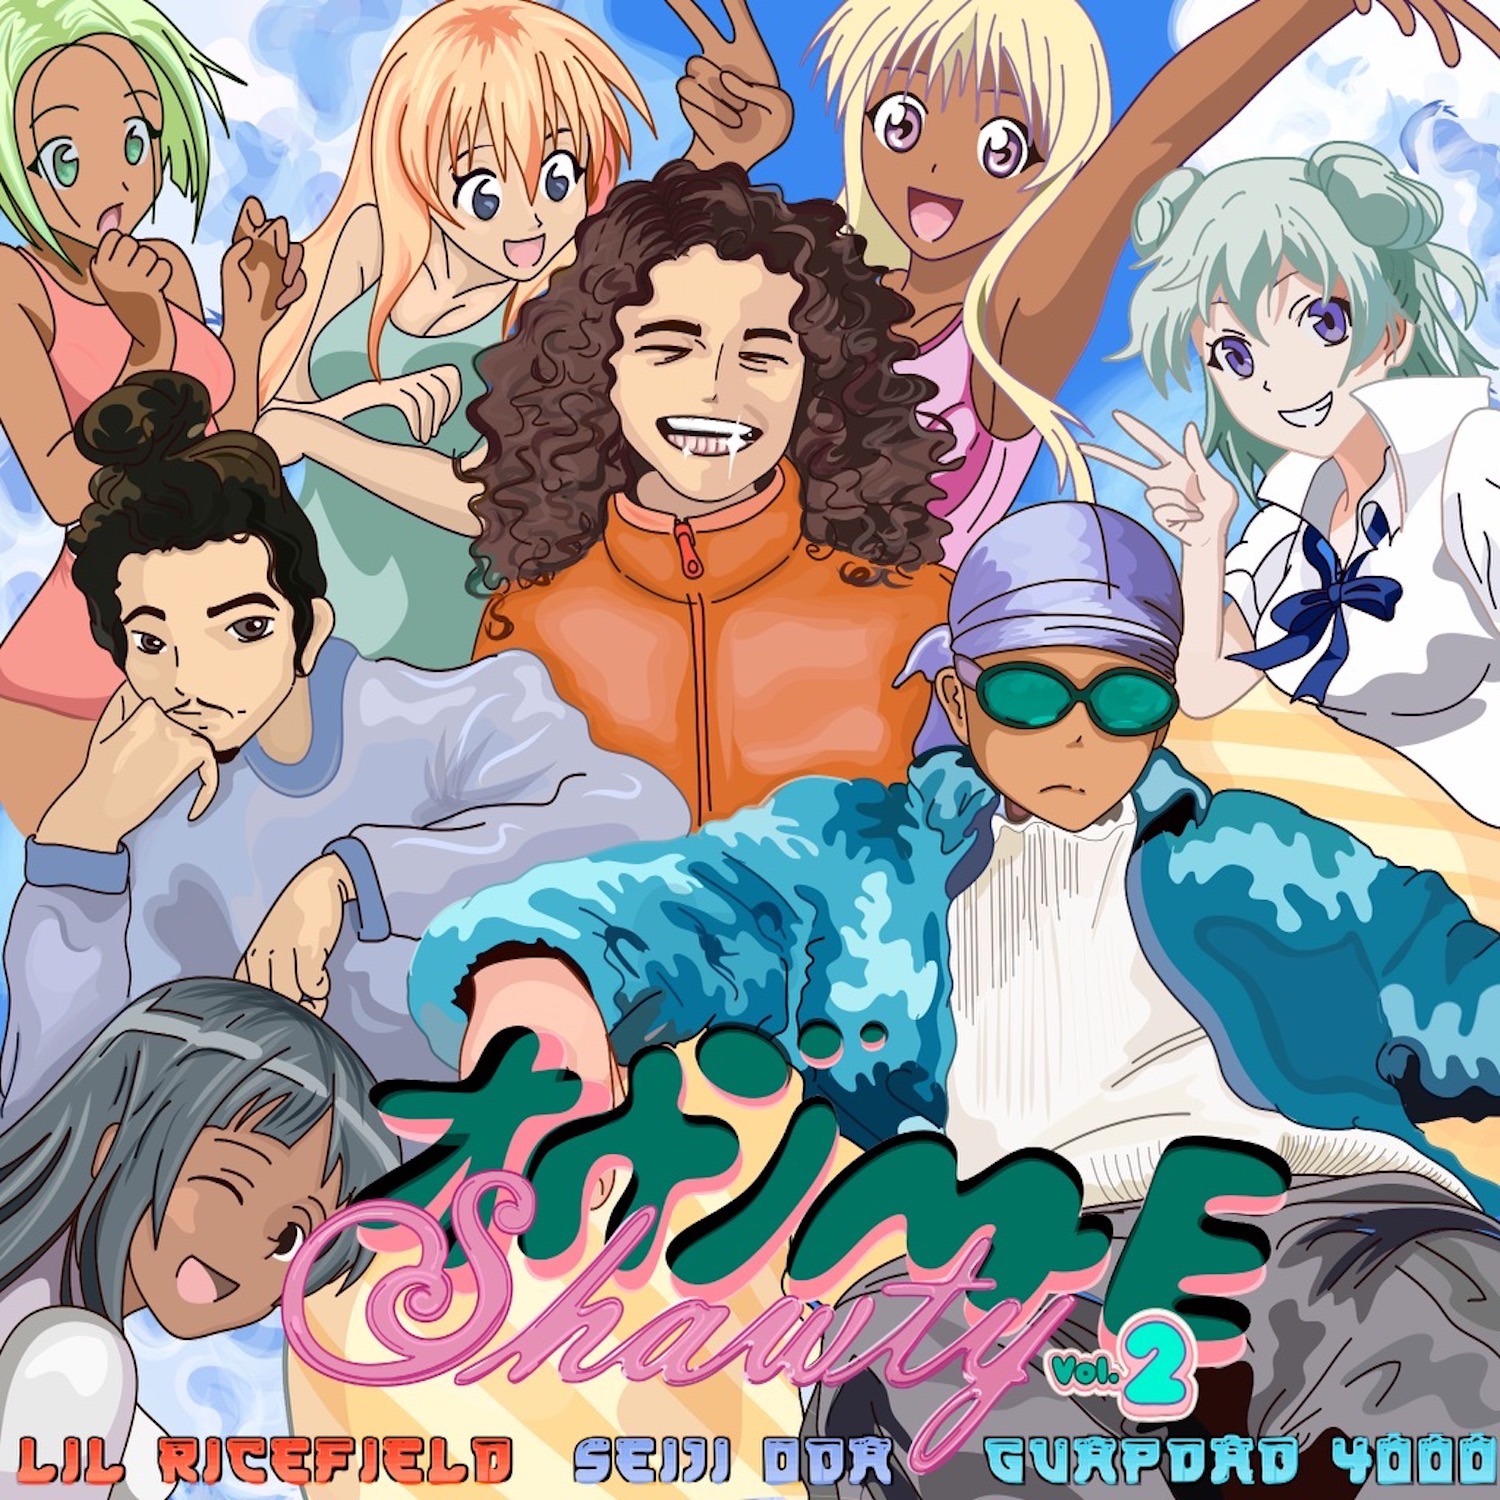 lil ricefield, Seiji Oda & Guapdad 4000 - Anime Shawty, Vol. 2 - Single